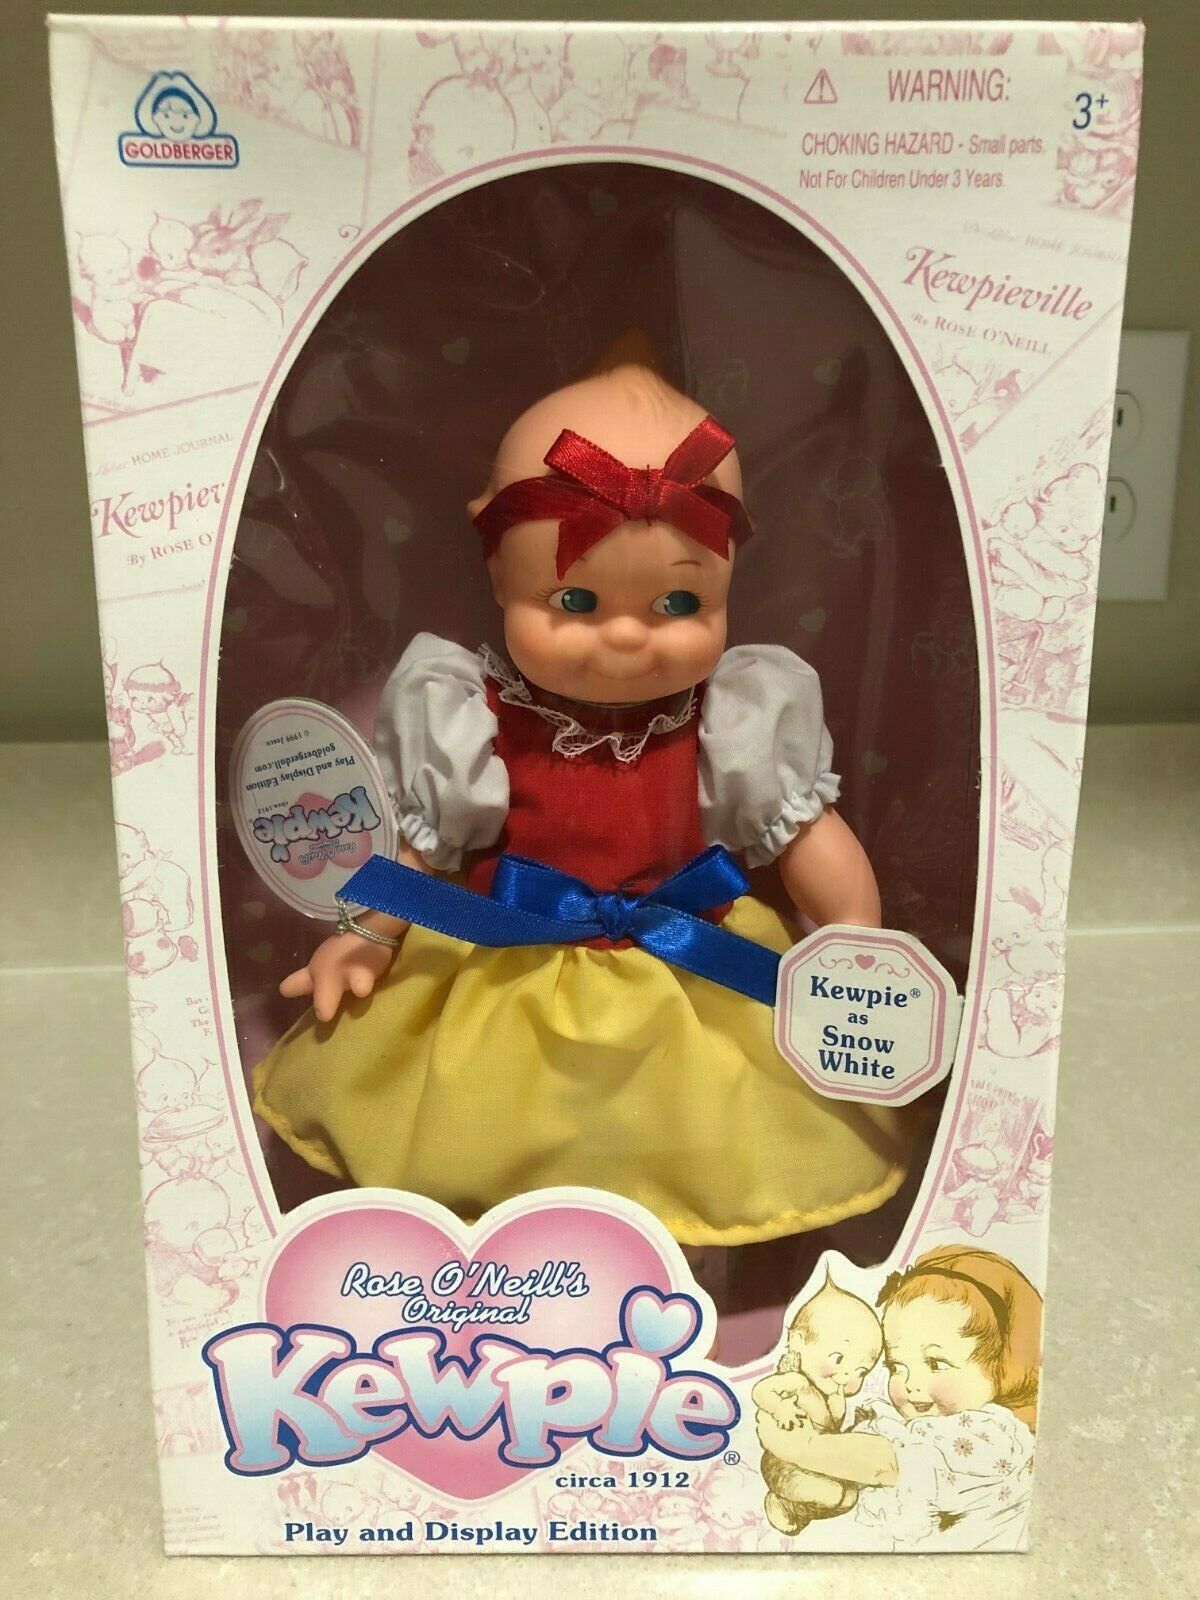 Kewpie Snow White 8" Rose O'neills Original Doll 1999 Goldberger